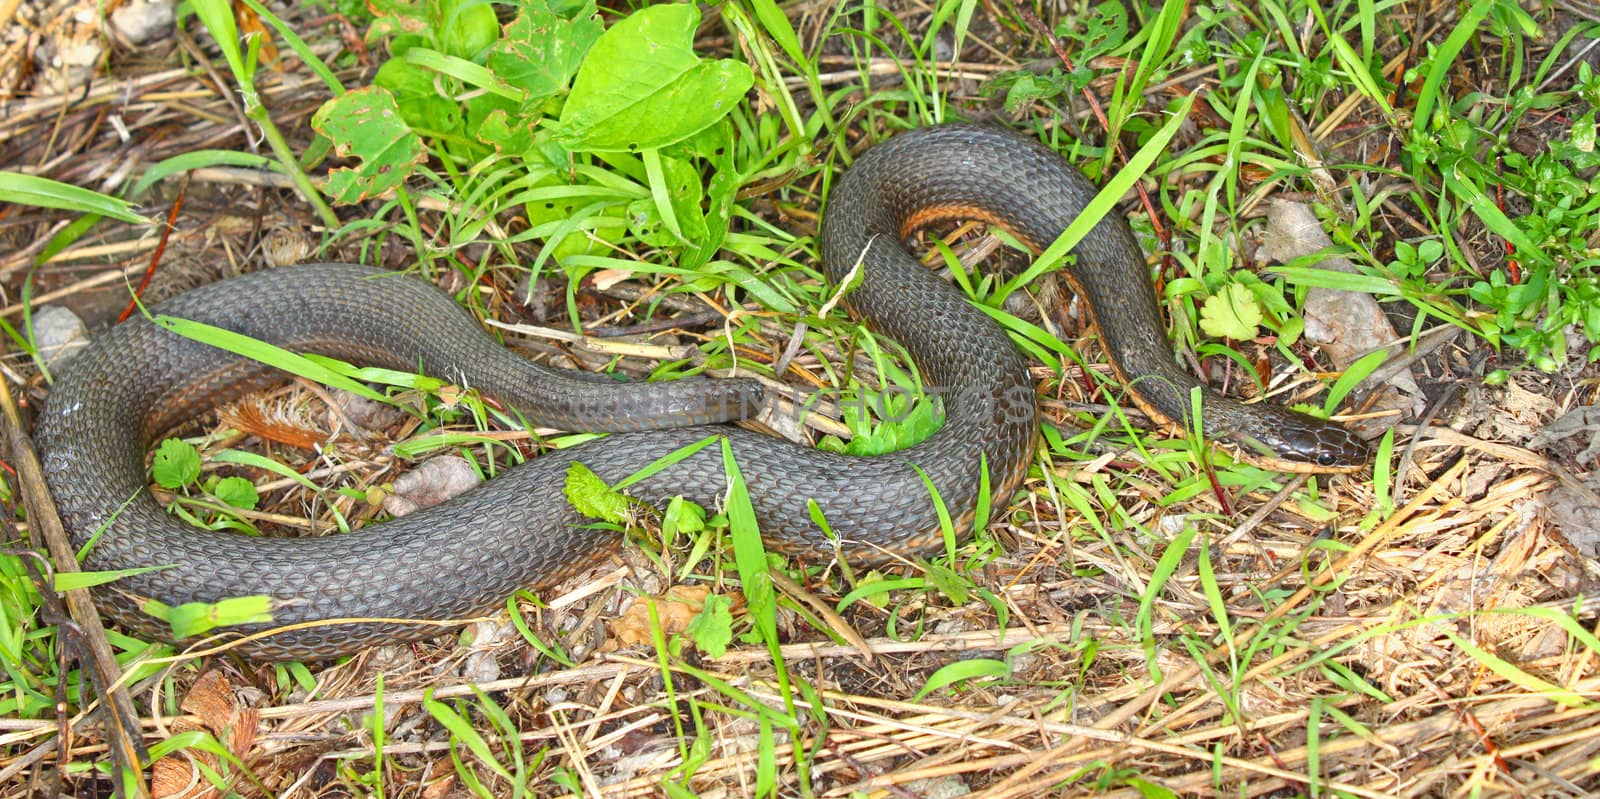 Queen Snake (Regina septemvittata) in the Des Plaines River valley of northeastern Illinois.